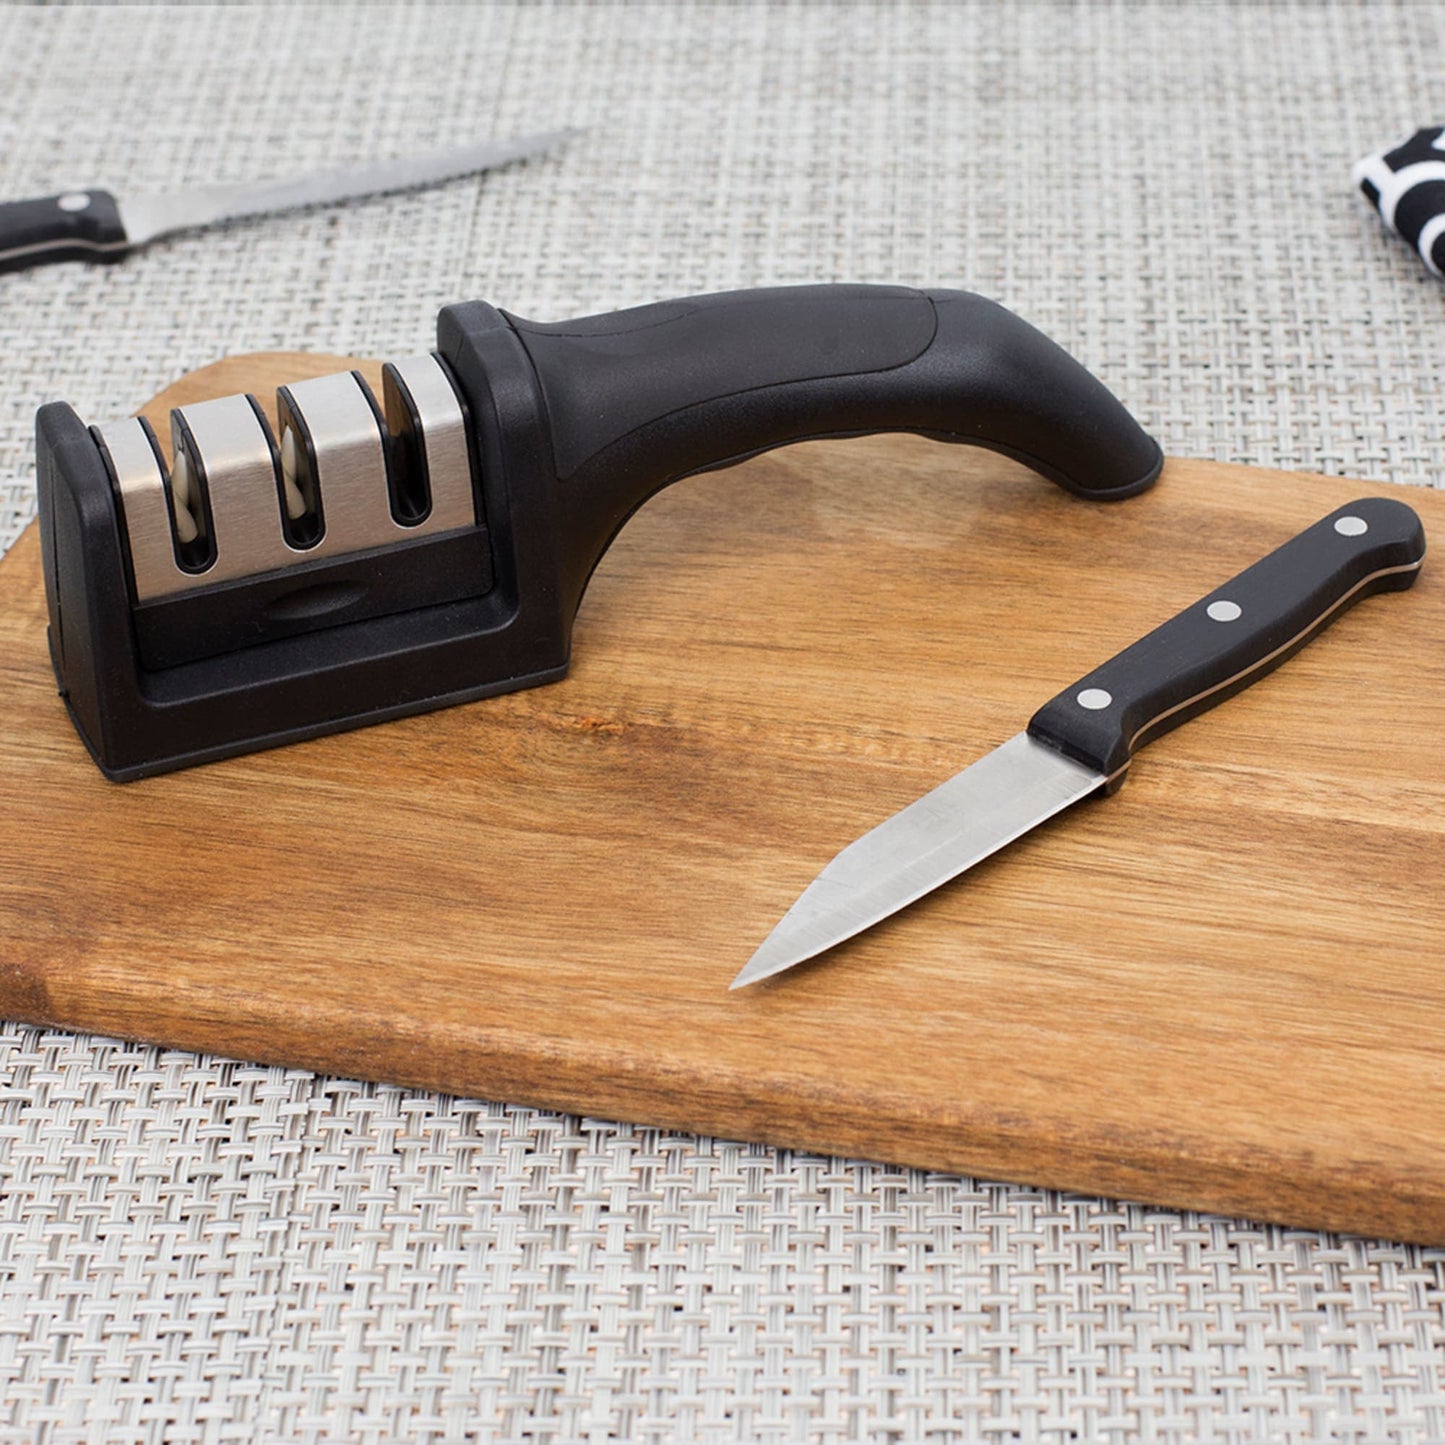 EDGE GRIP KNIFE SHARPENER– Shop in the Kitchen